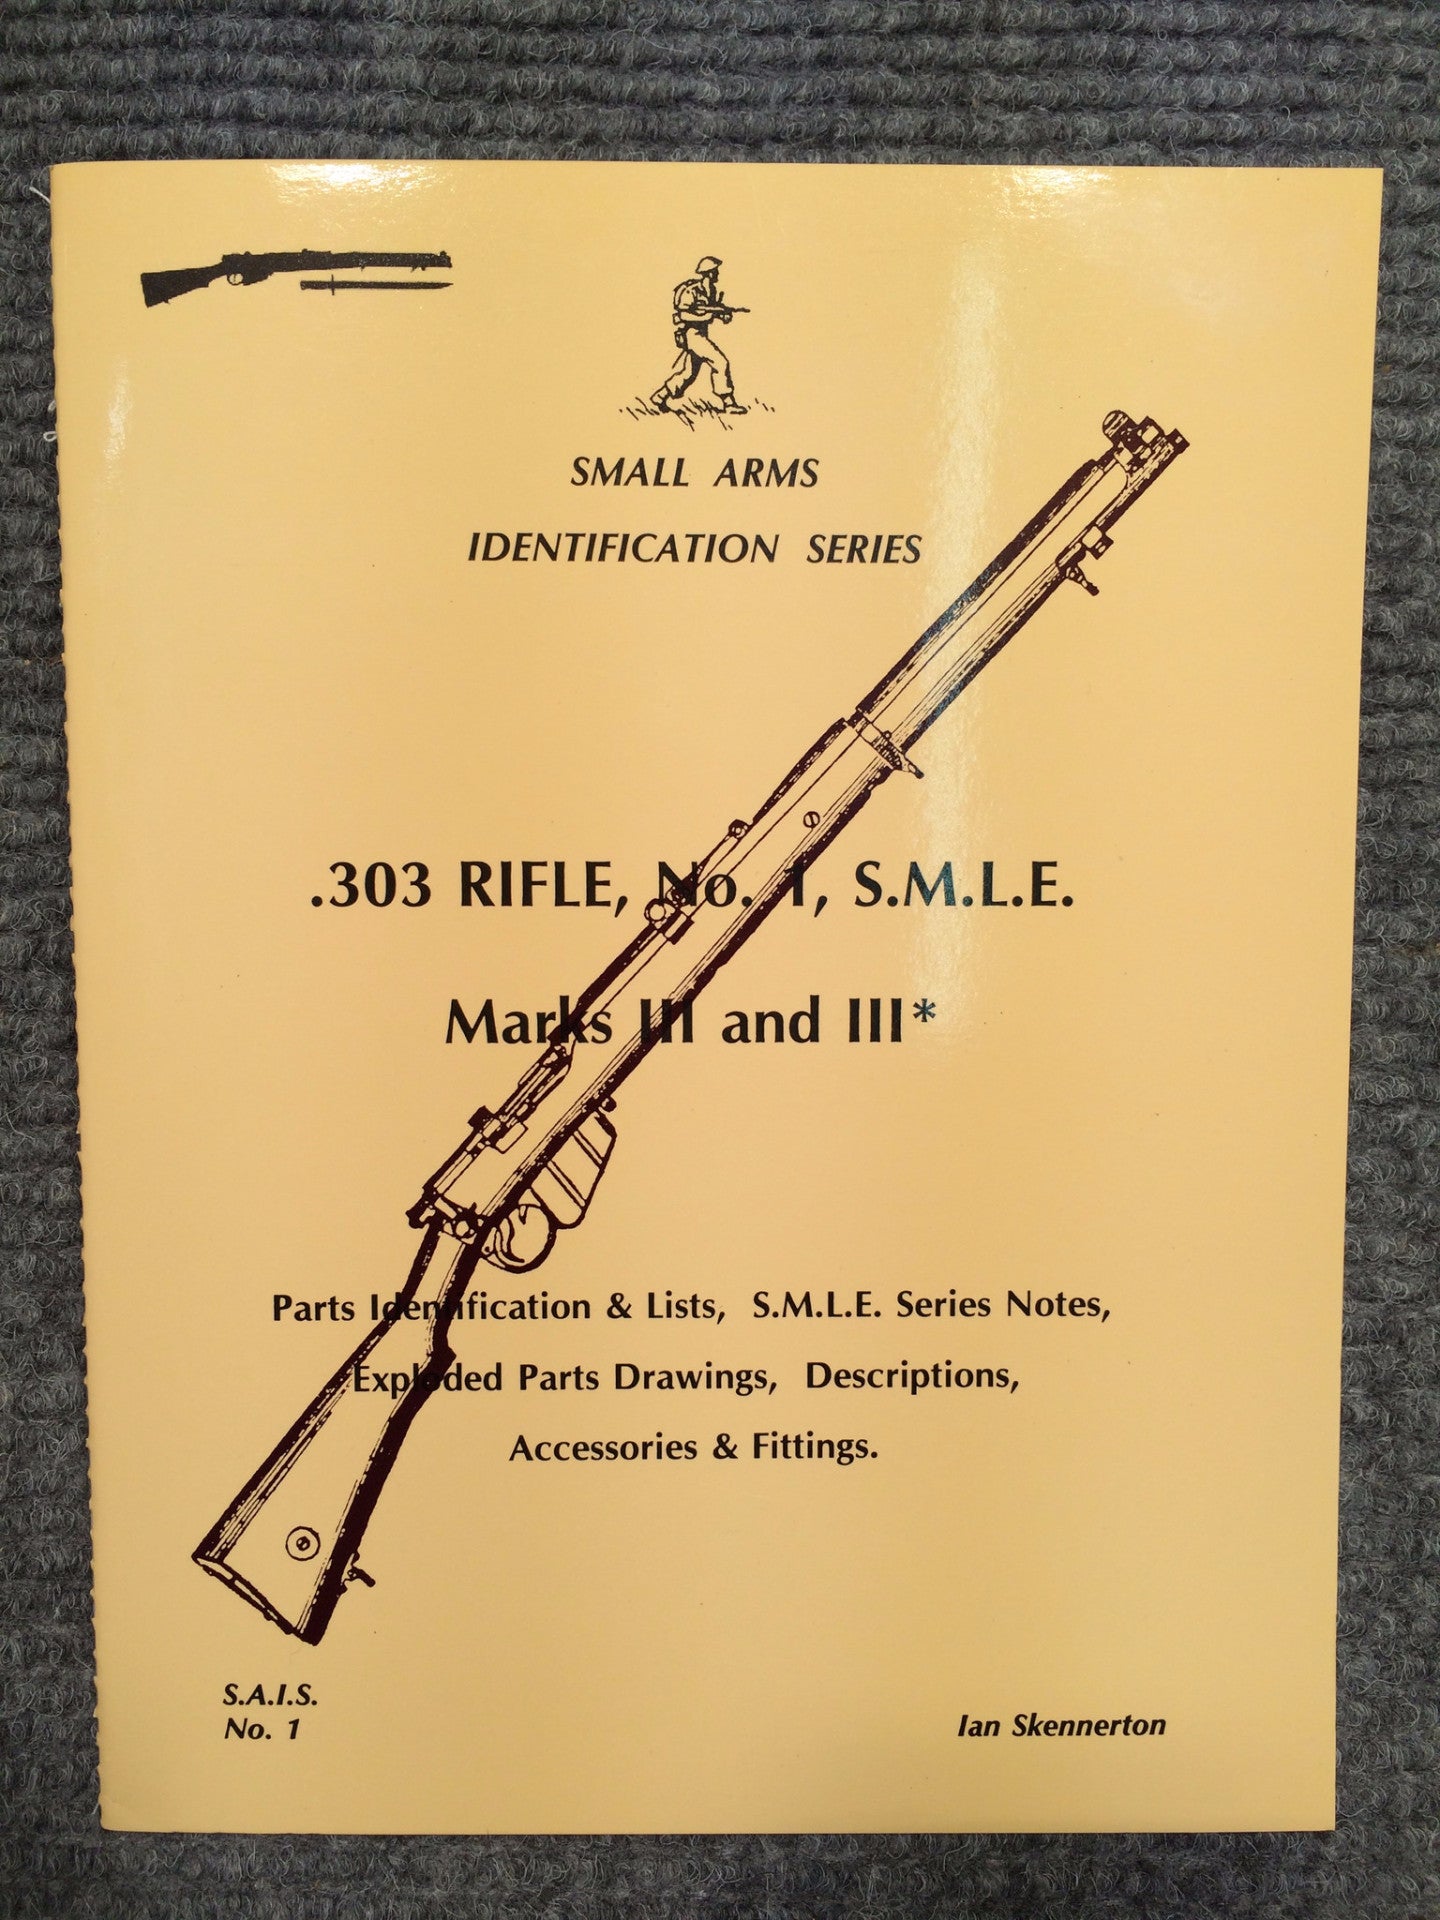 "303 Rifle No1 SMLE Marks III and III* Identification" by Ian Skennerton